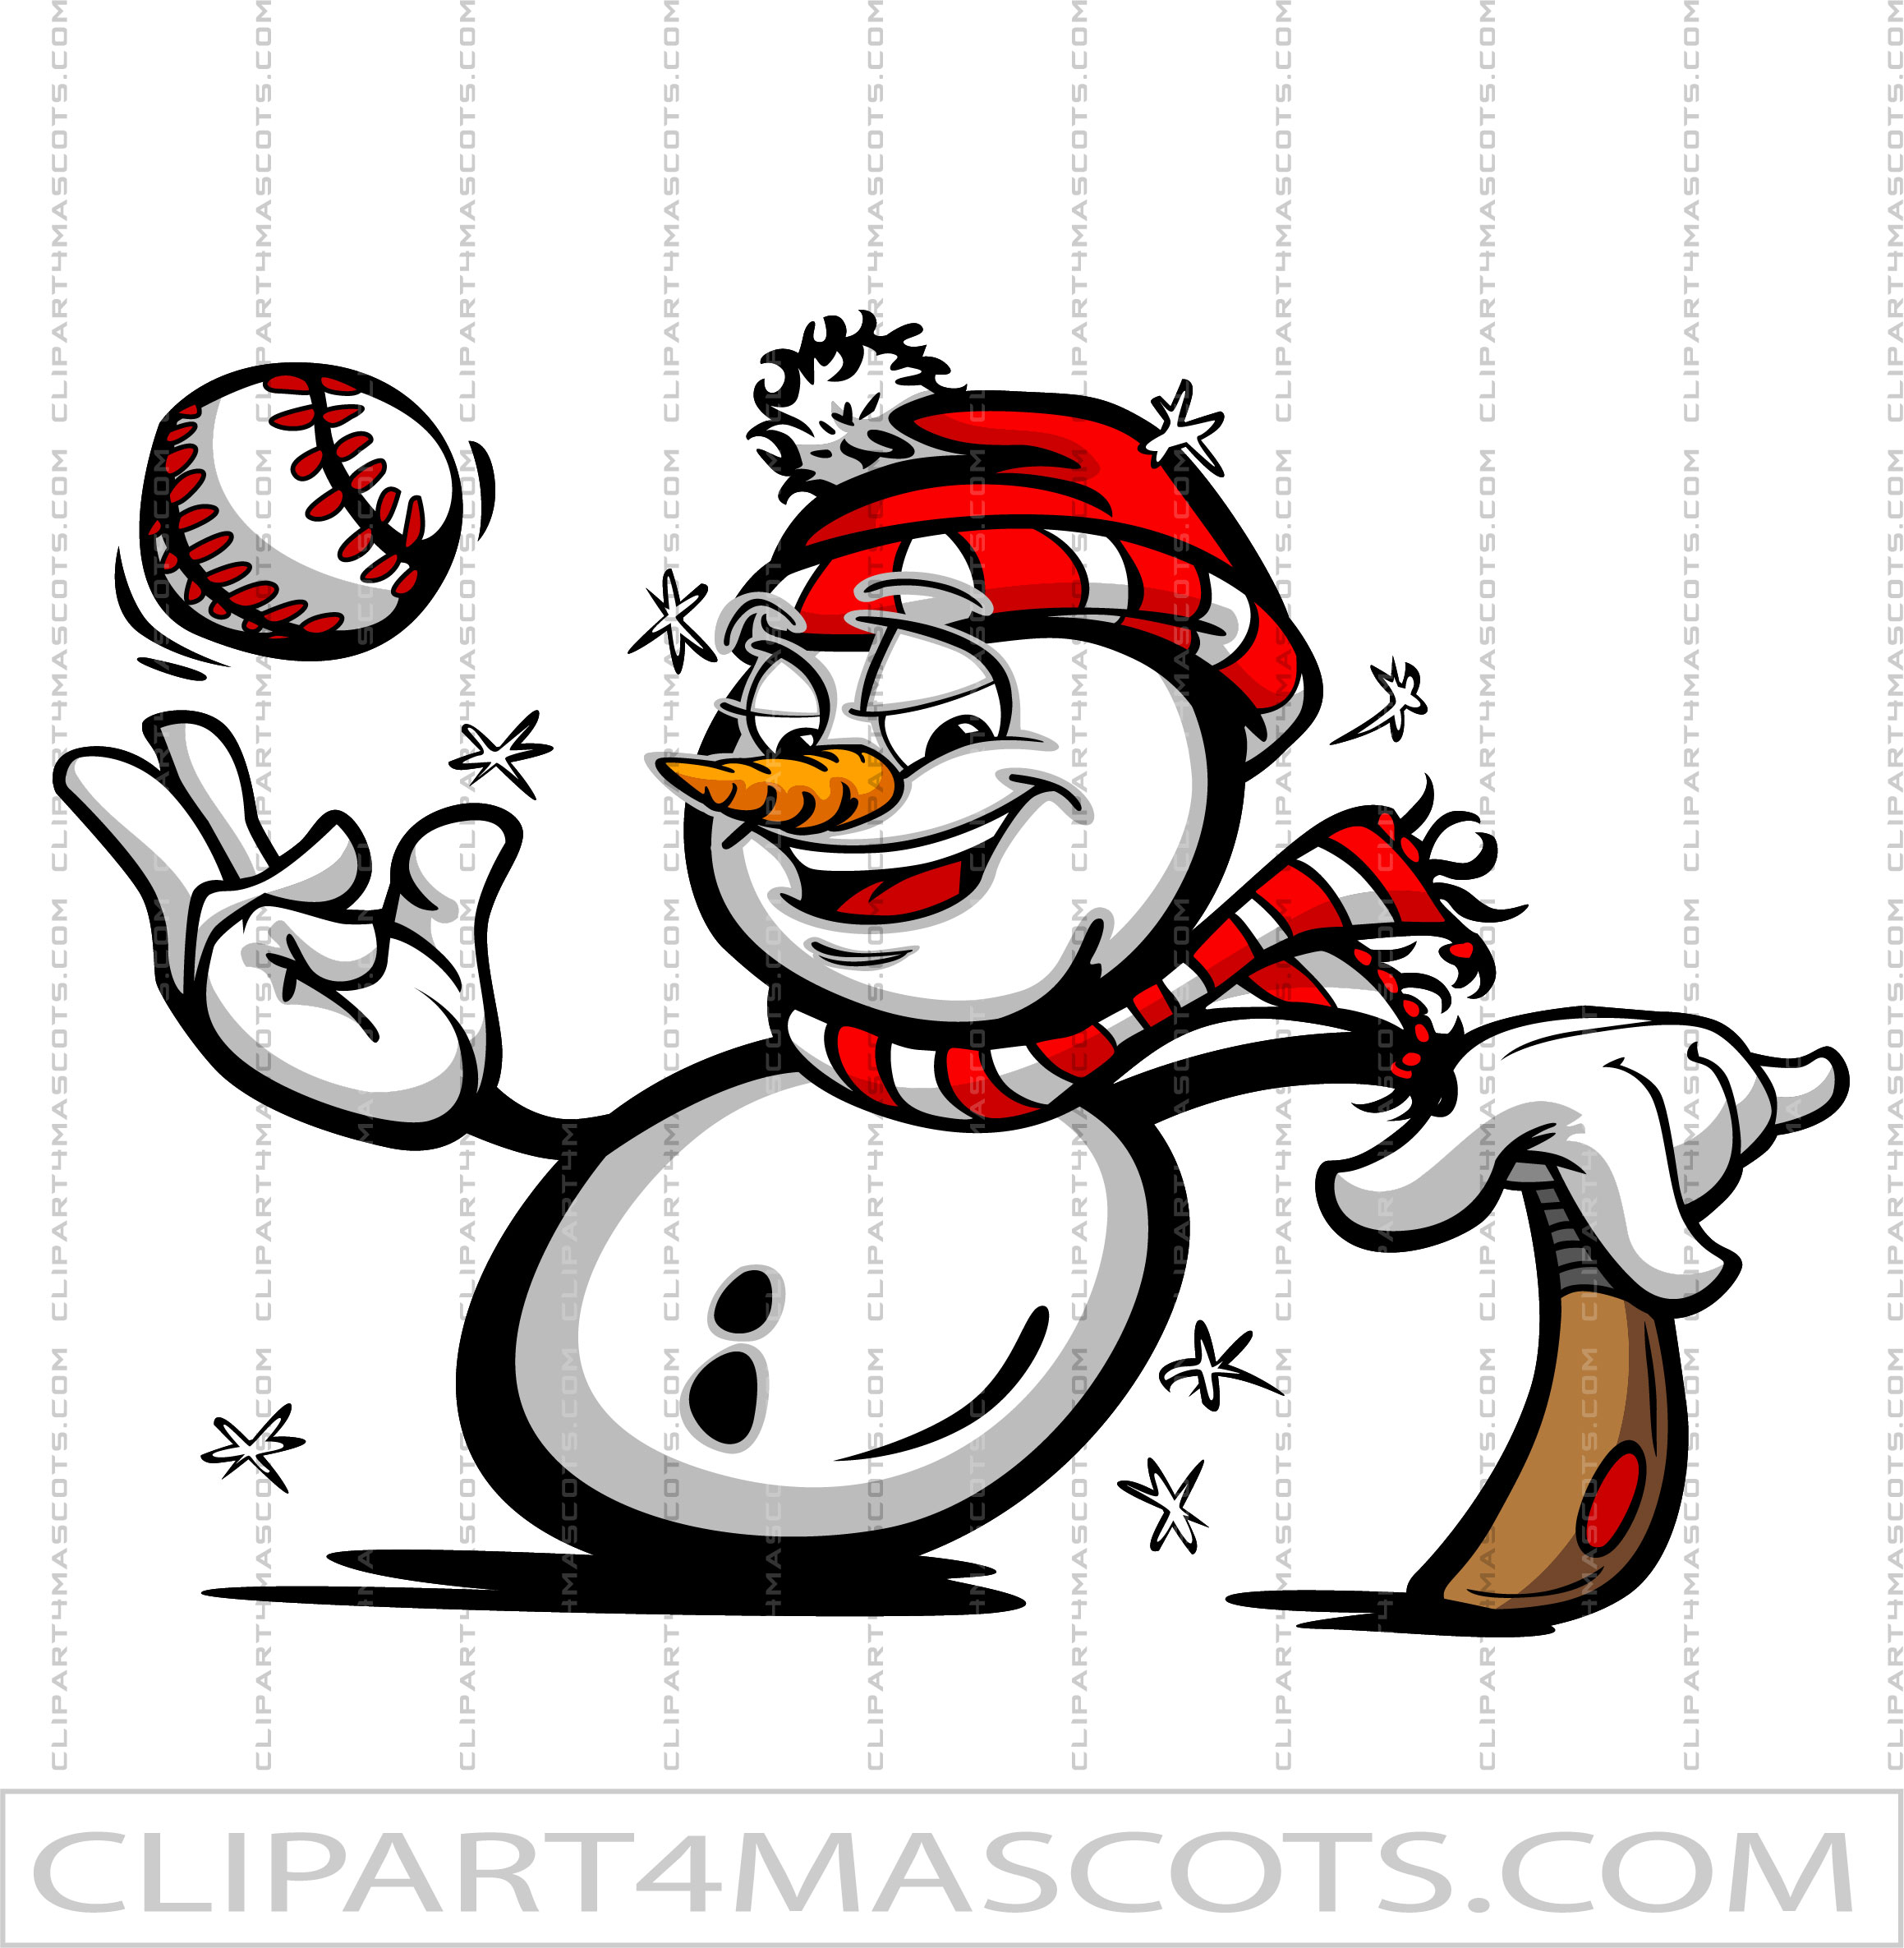 Snowman Baseball Clipart